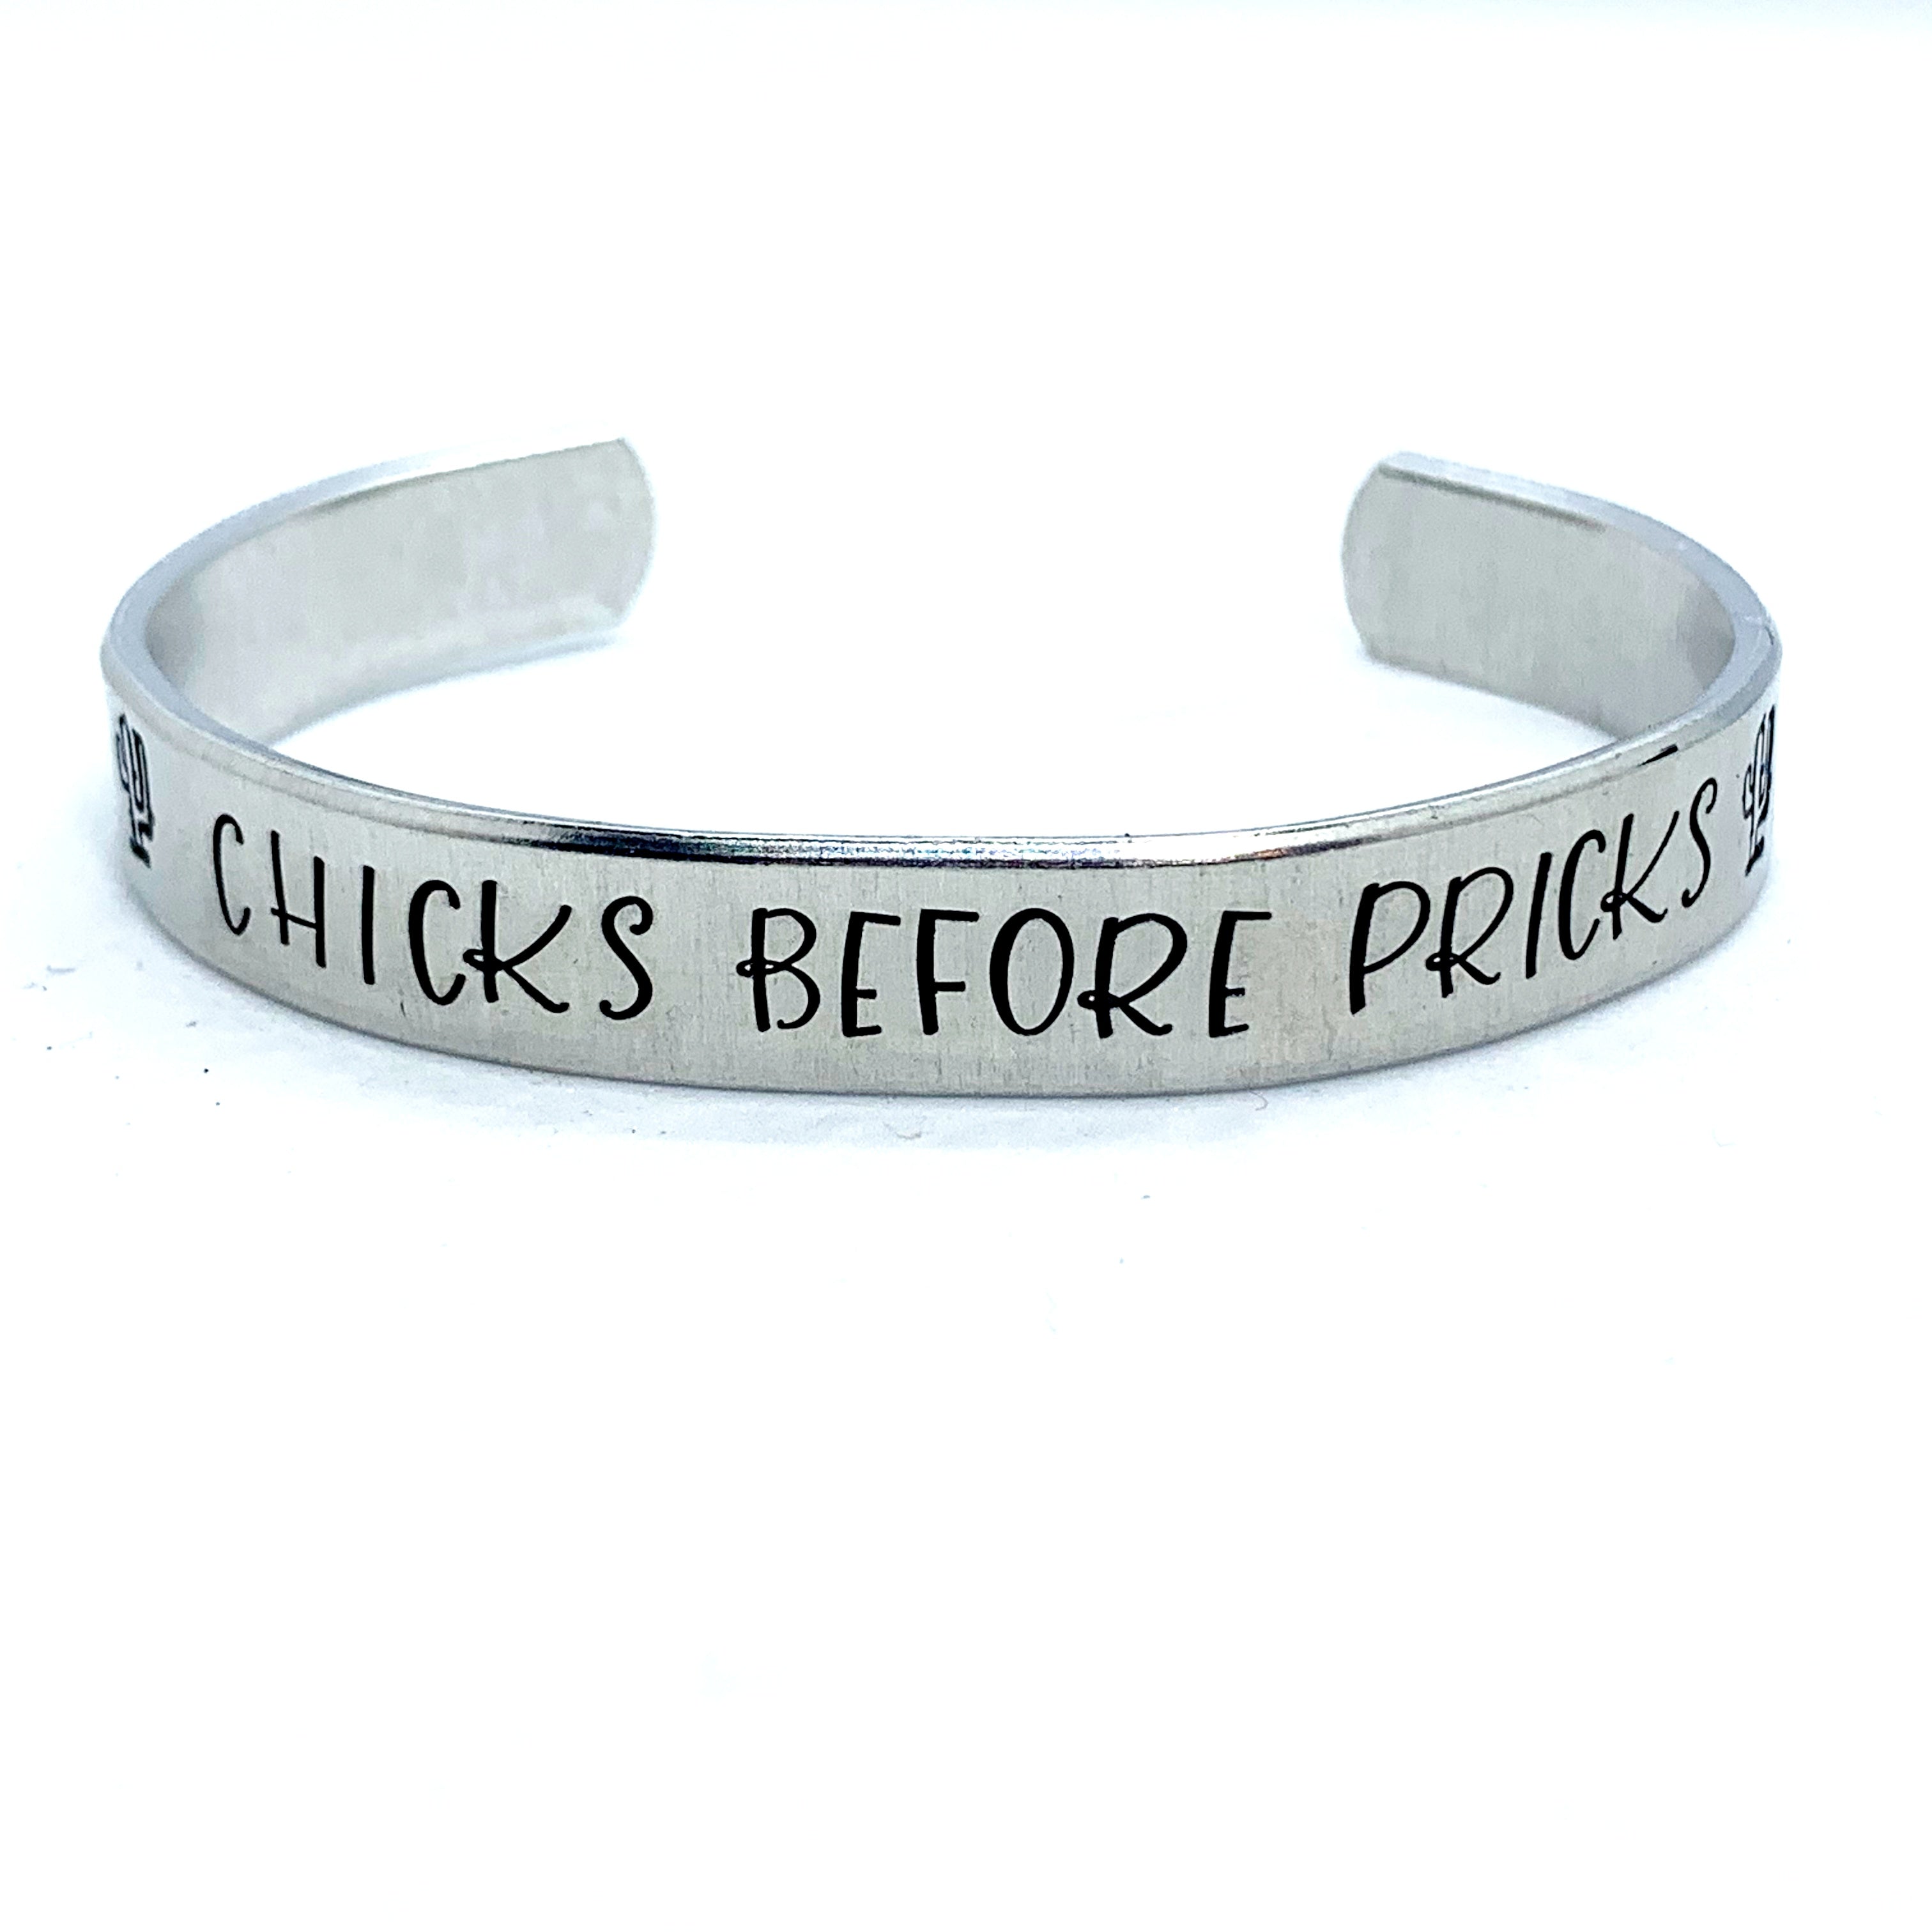 ⅜ inch Aluminum Cuff - Chicks Before Pricks